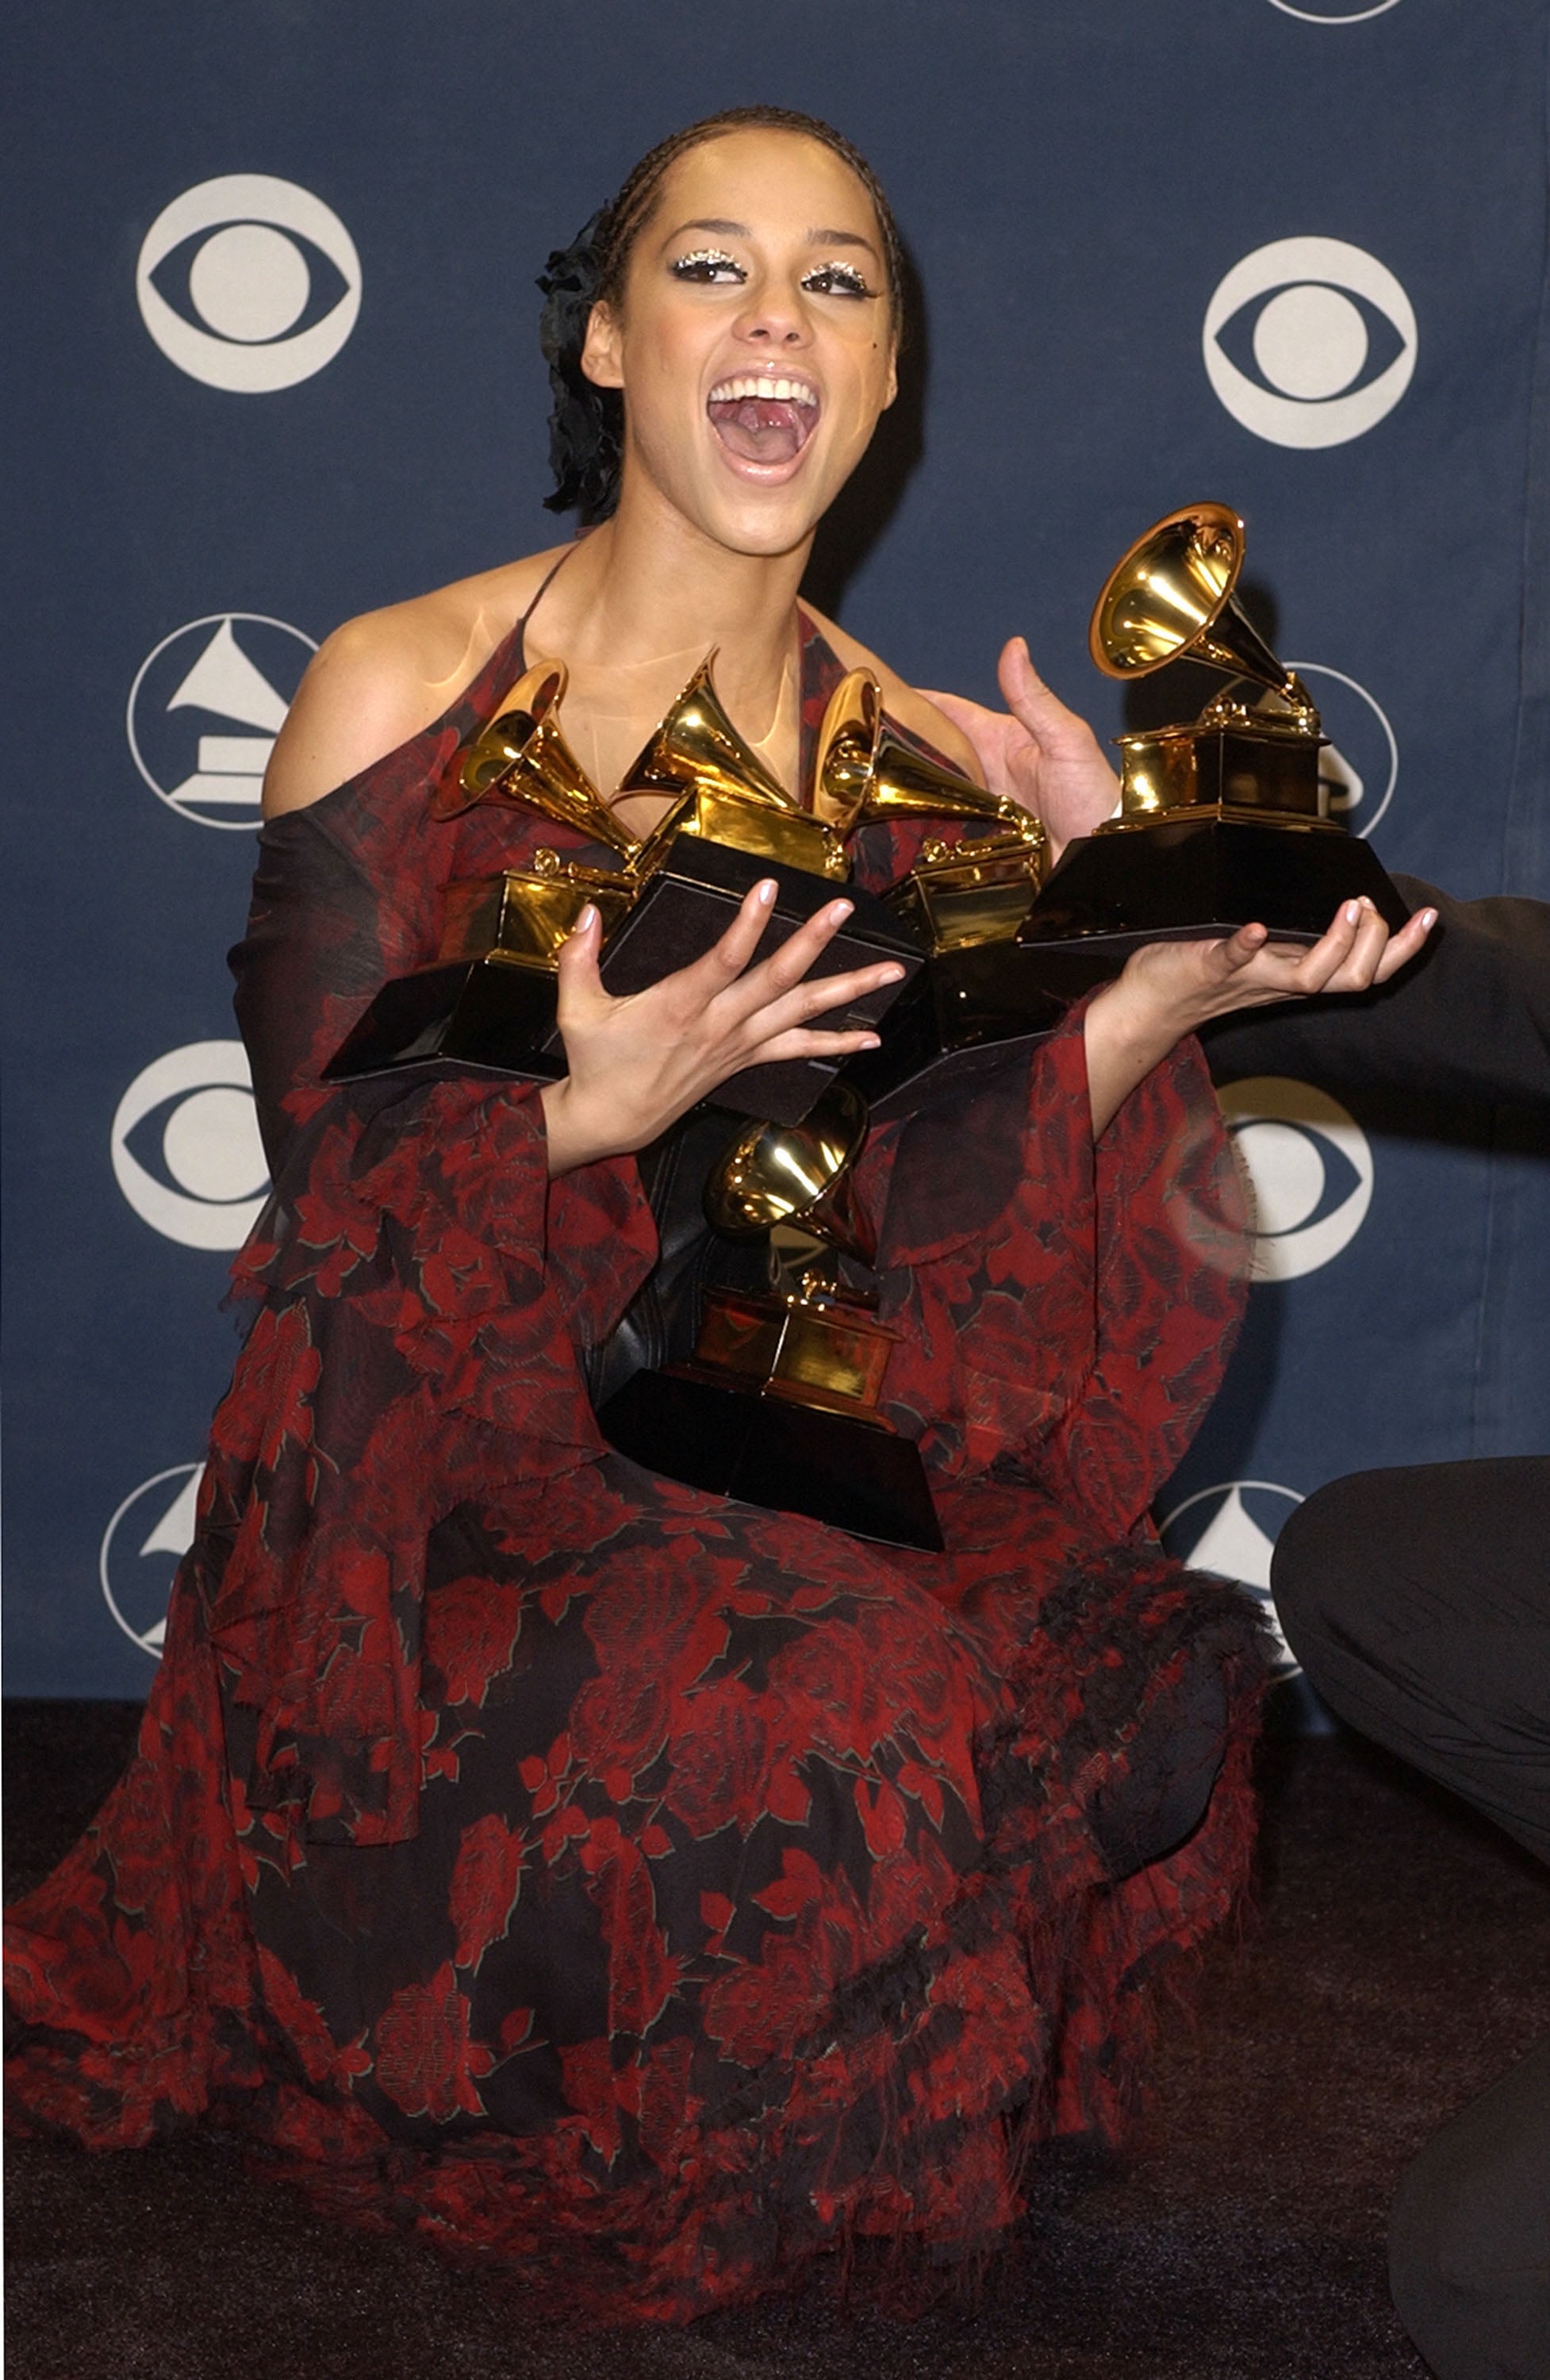 Alicia Keys picked up multiple awards back in 2002.